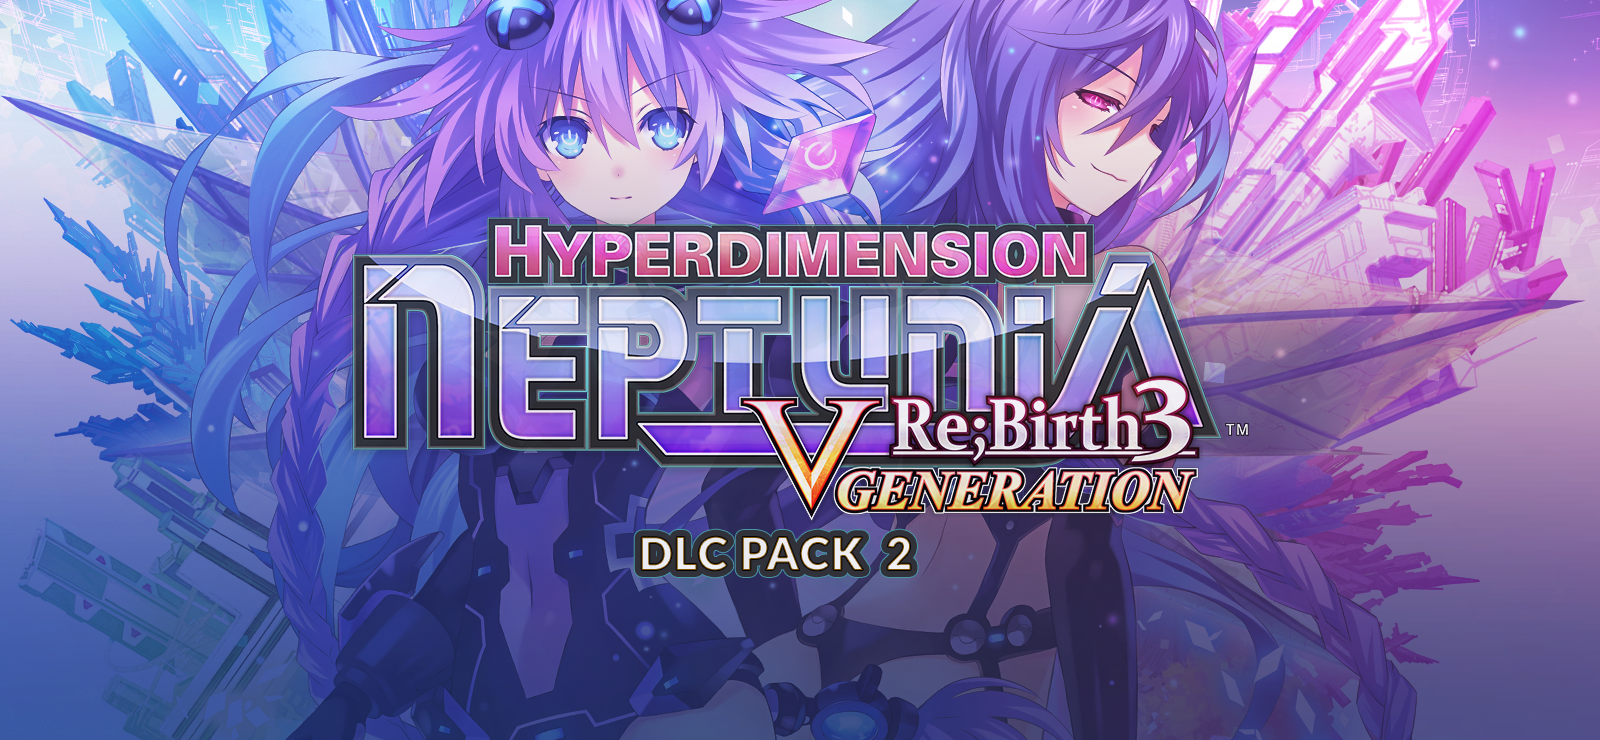 Hyperdimension Neptunia Re;Birth3 V Generation - DLC Pack 2